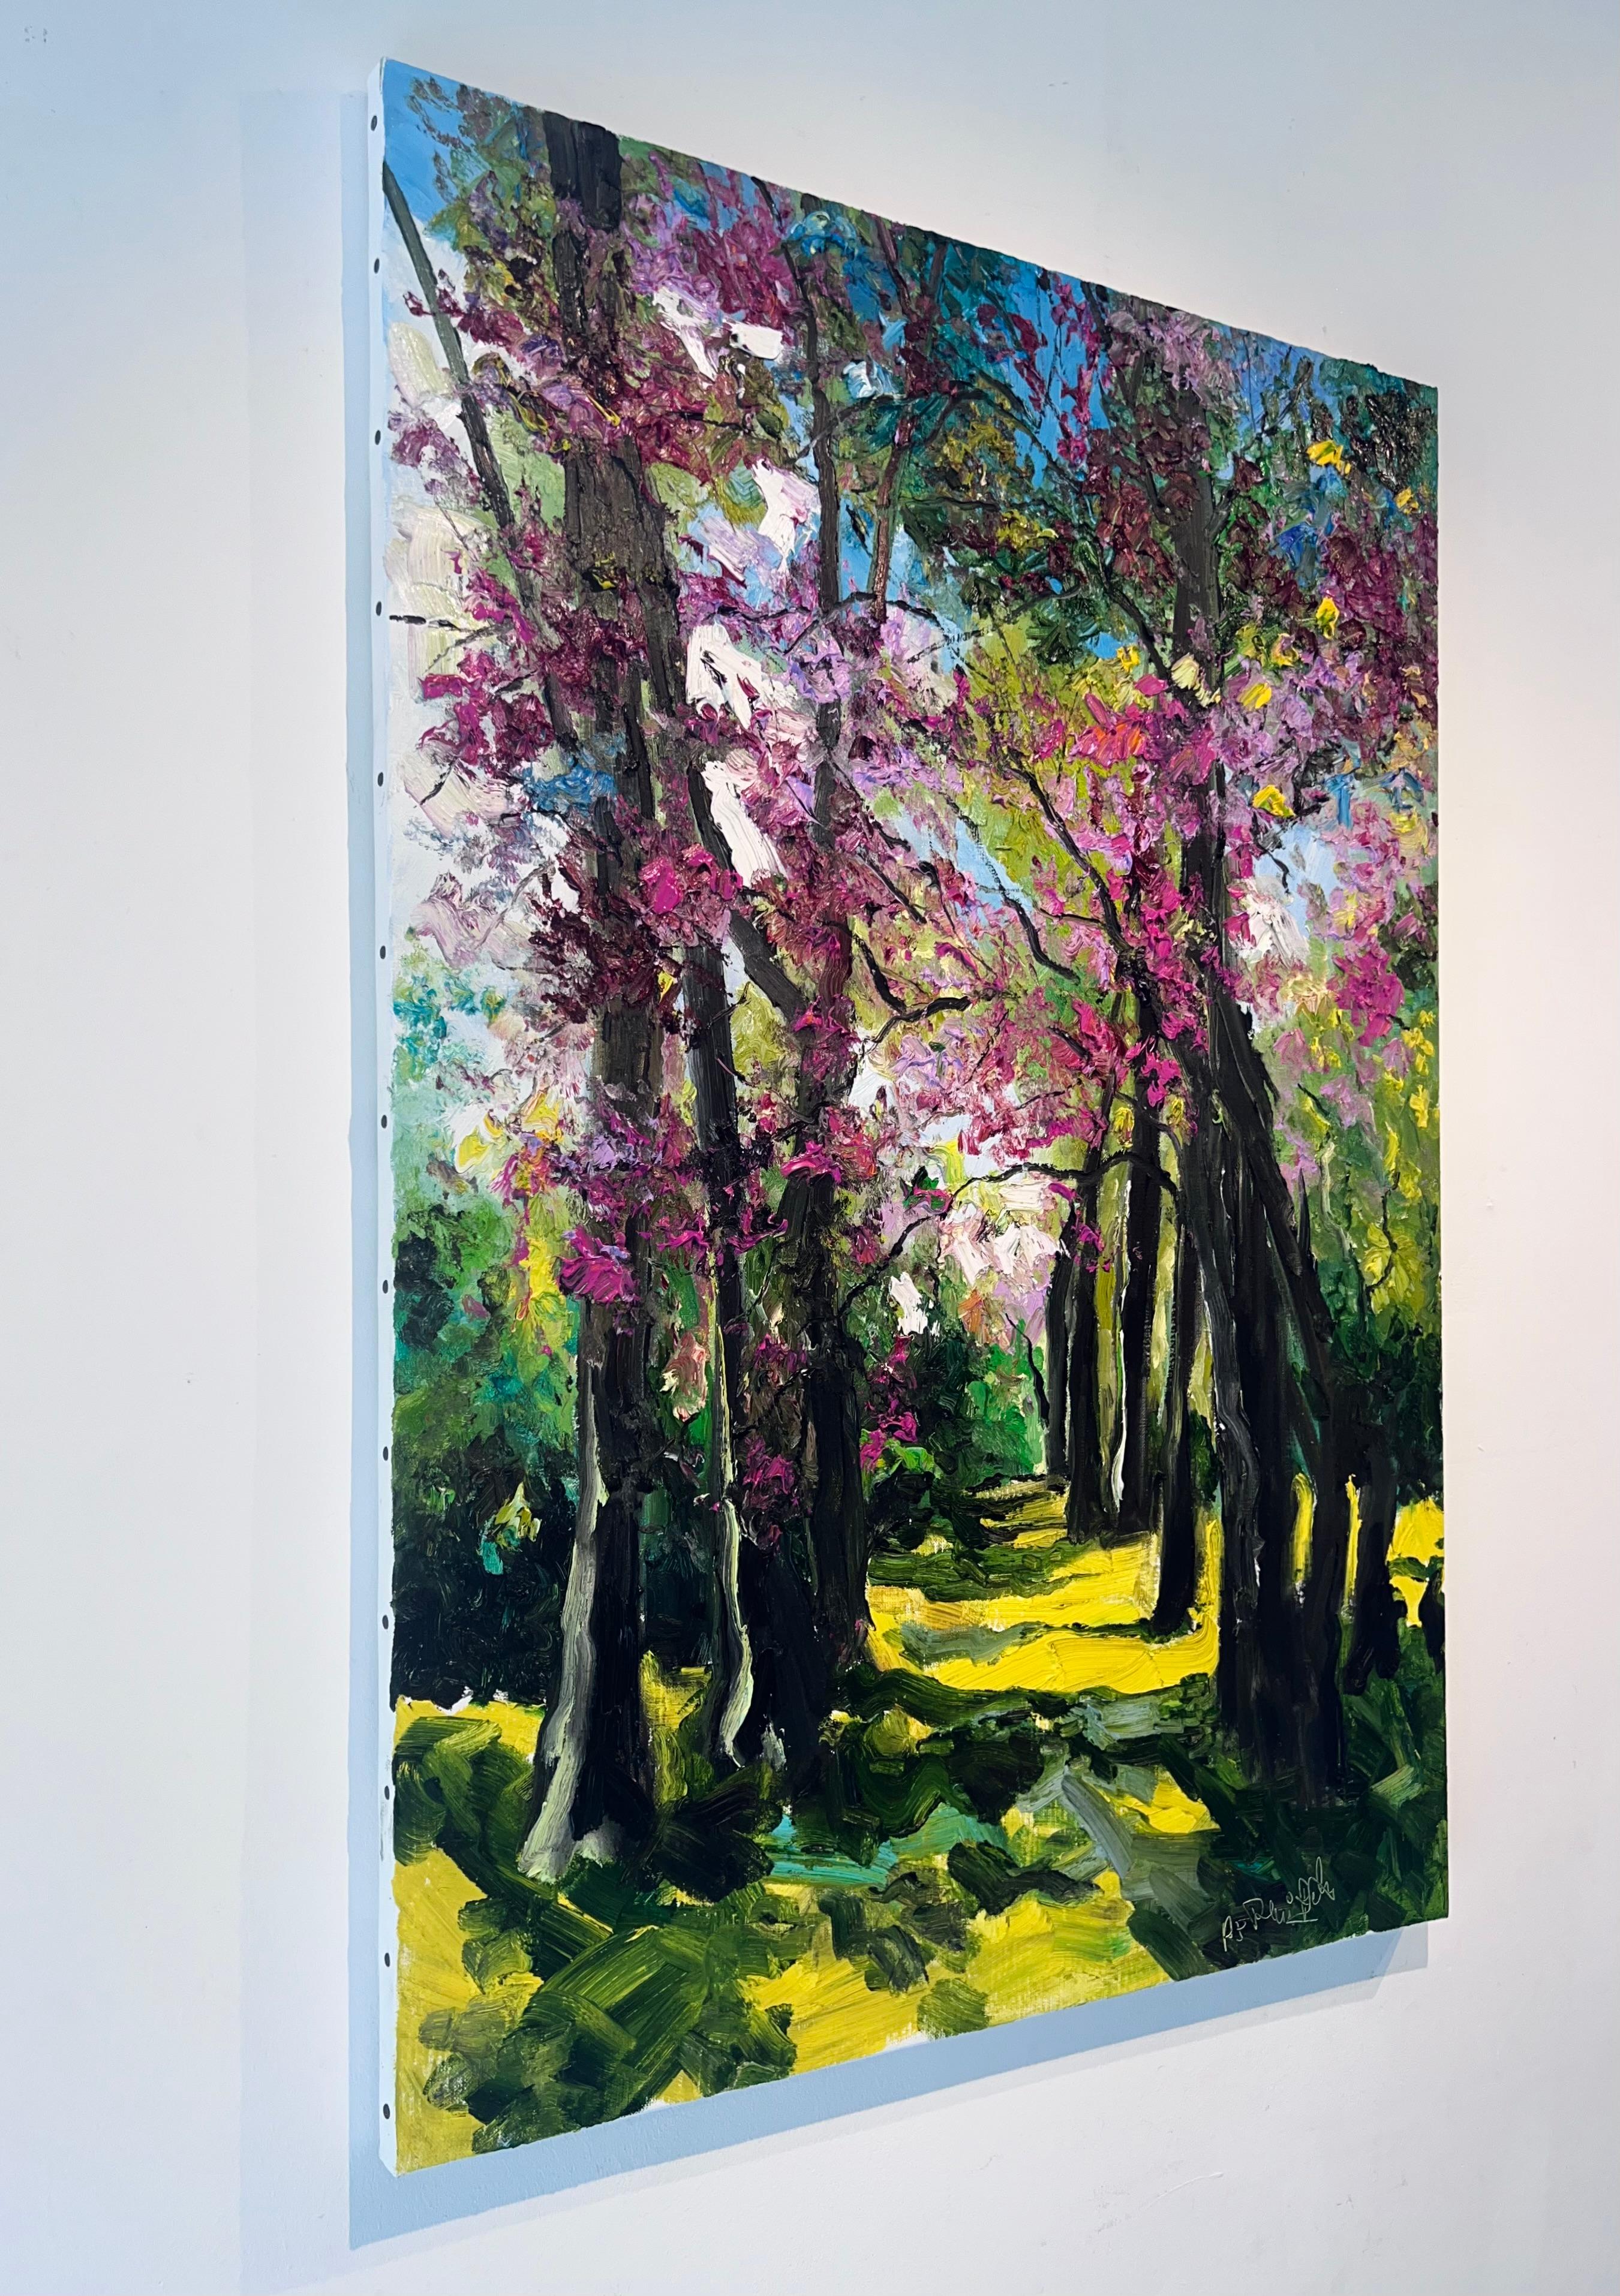 Frühling Wald-Original Impressionismus Landschaft Ölgemälde-Gegenwartskunst (Abstrakter Impressionismus), Painting, von Denis Ribas 